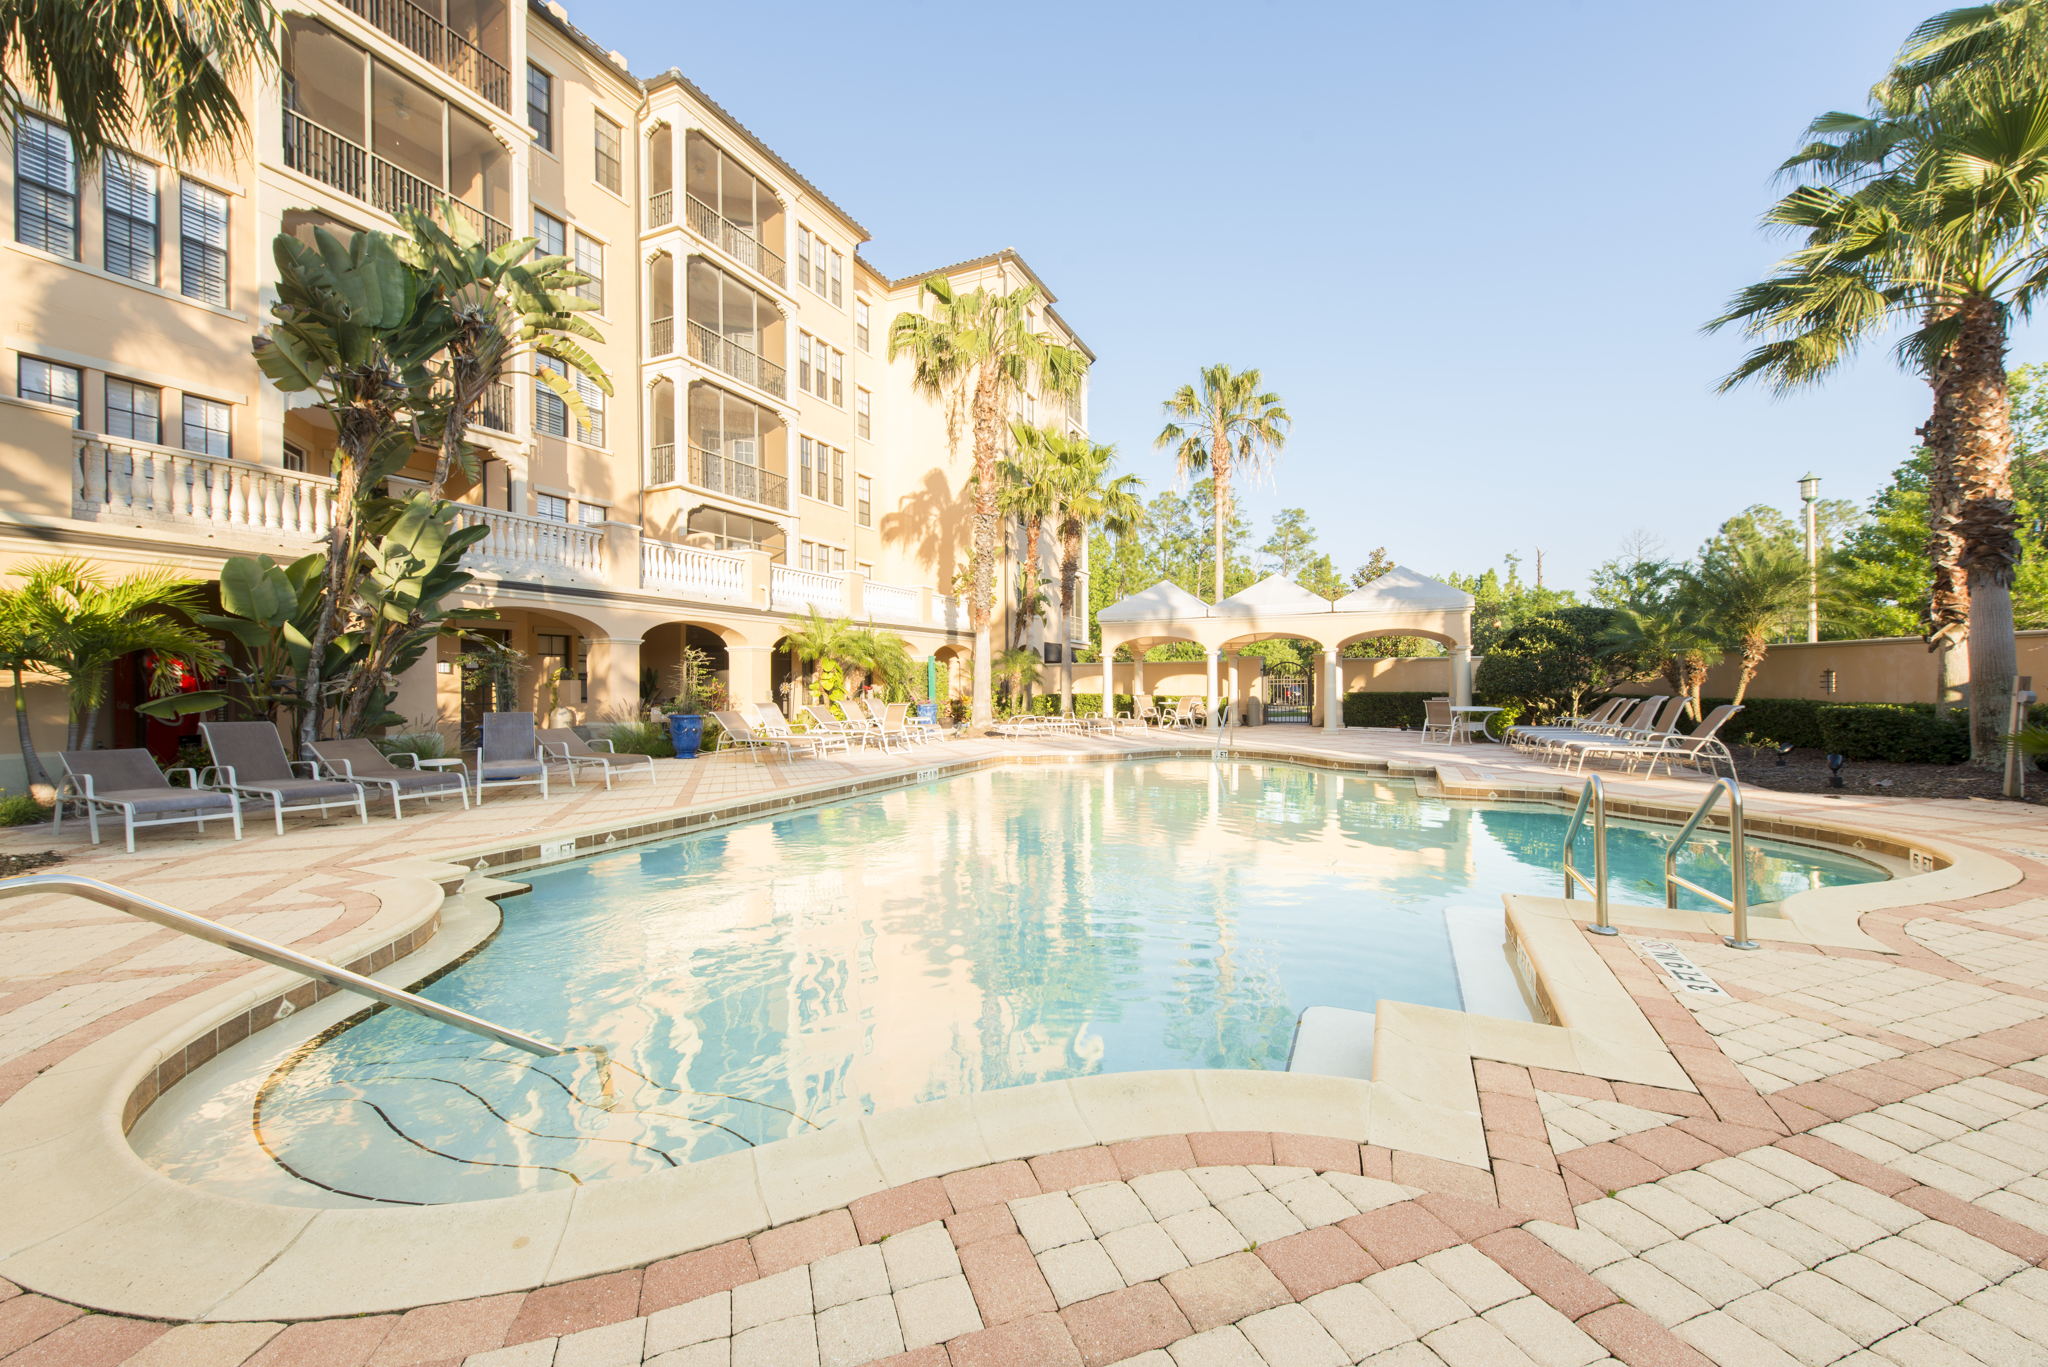 Resort-Style Pool Heated Year Round!